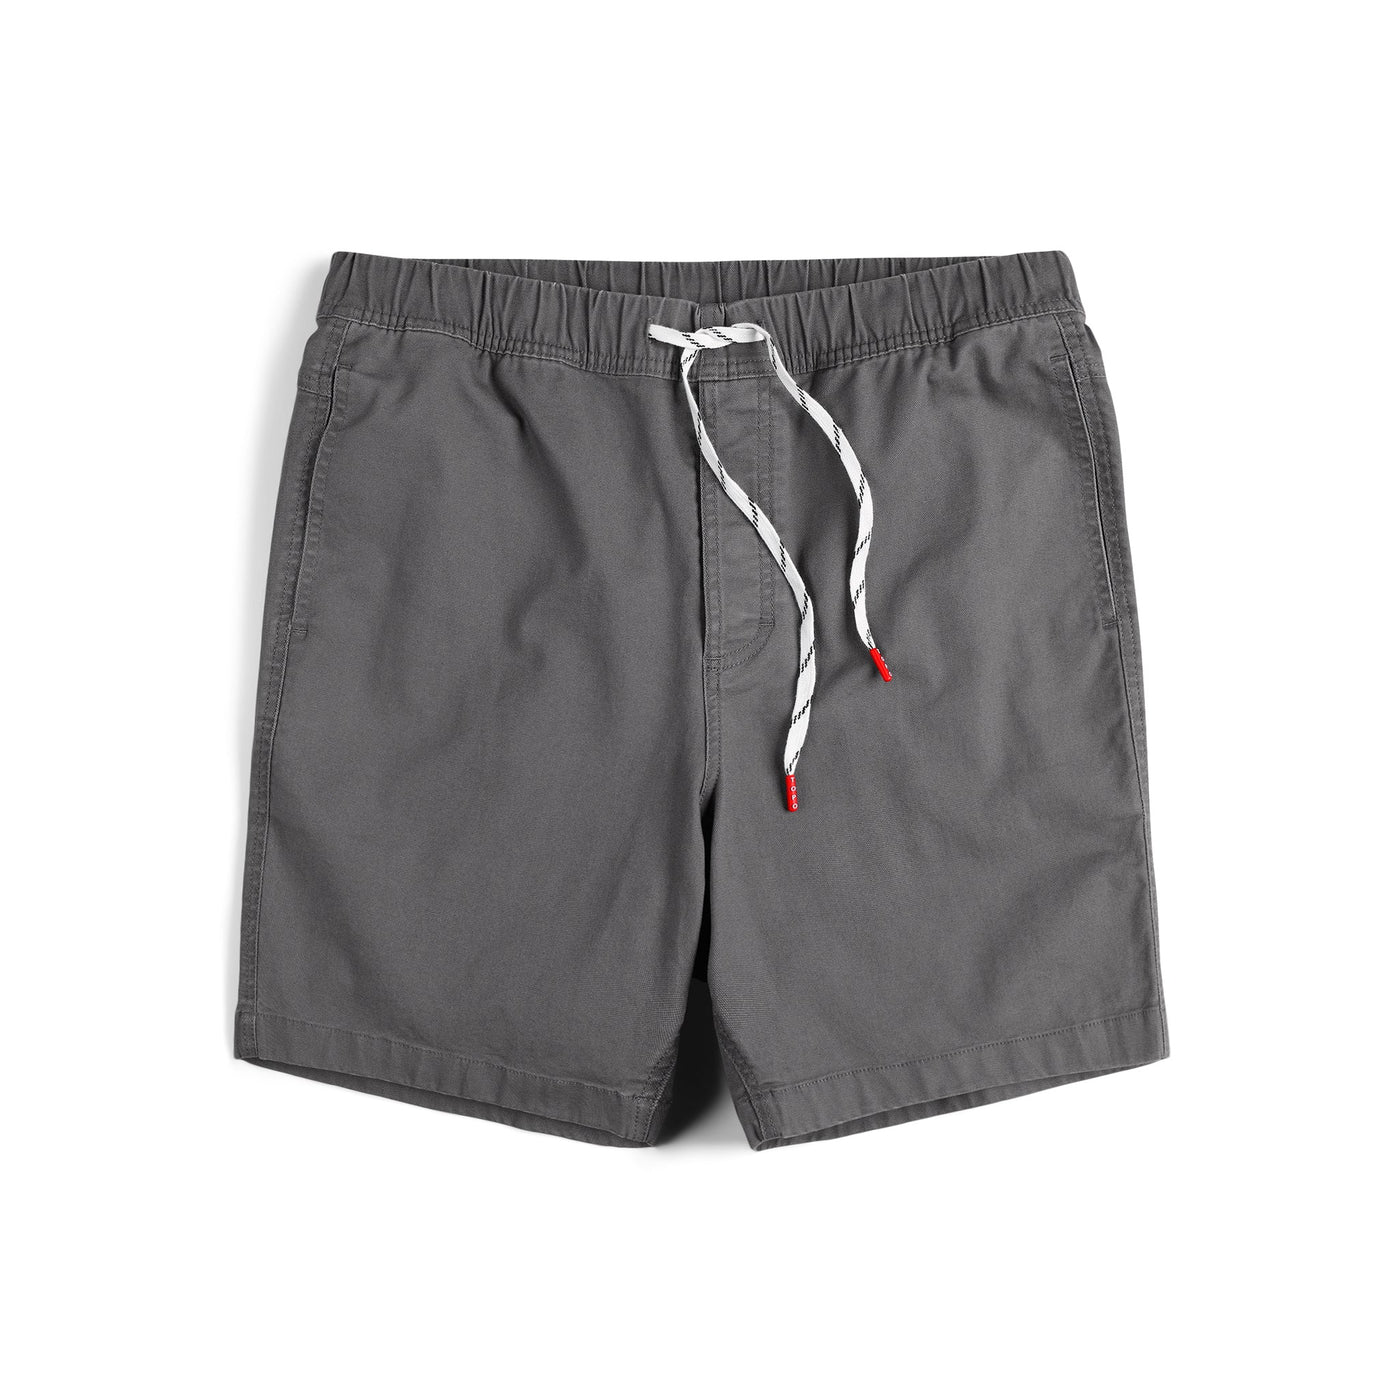 Topo Designs Men's drawstring Dirt Shorts 100% organic cotton in "Charcoal" gray.